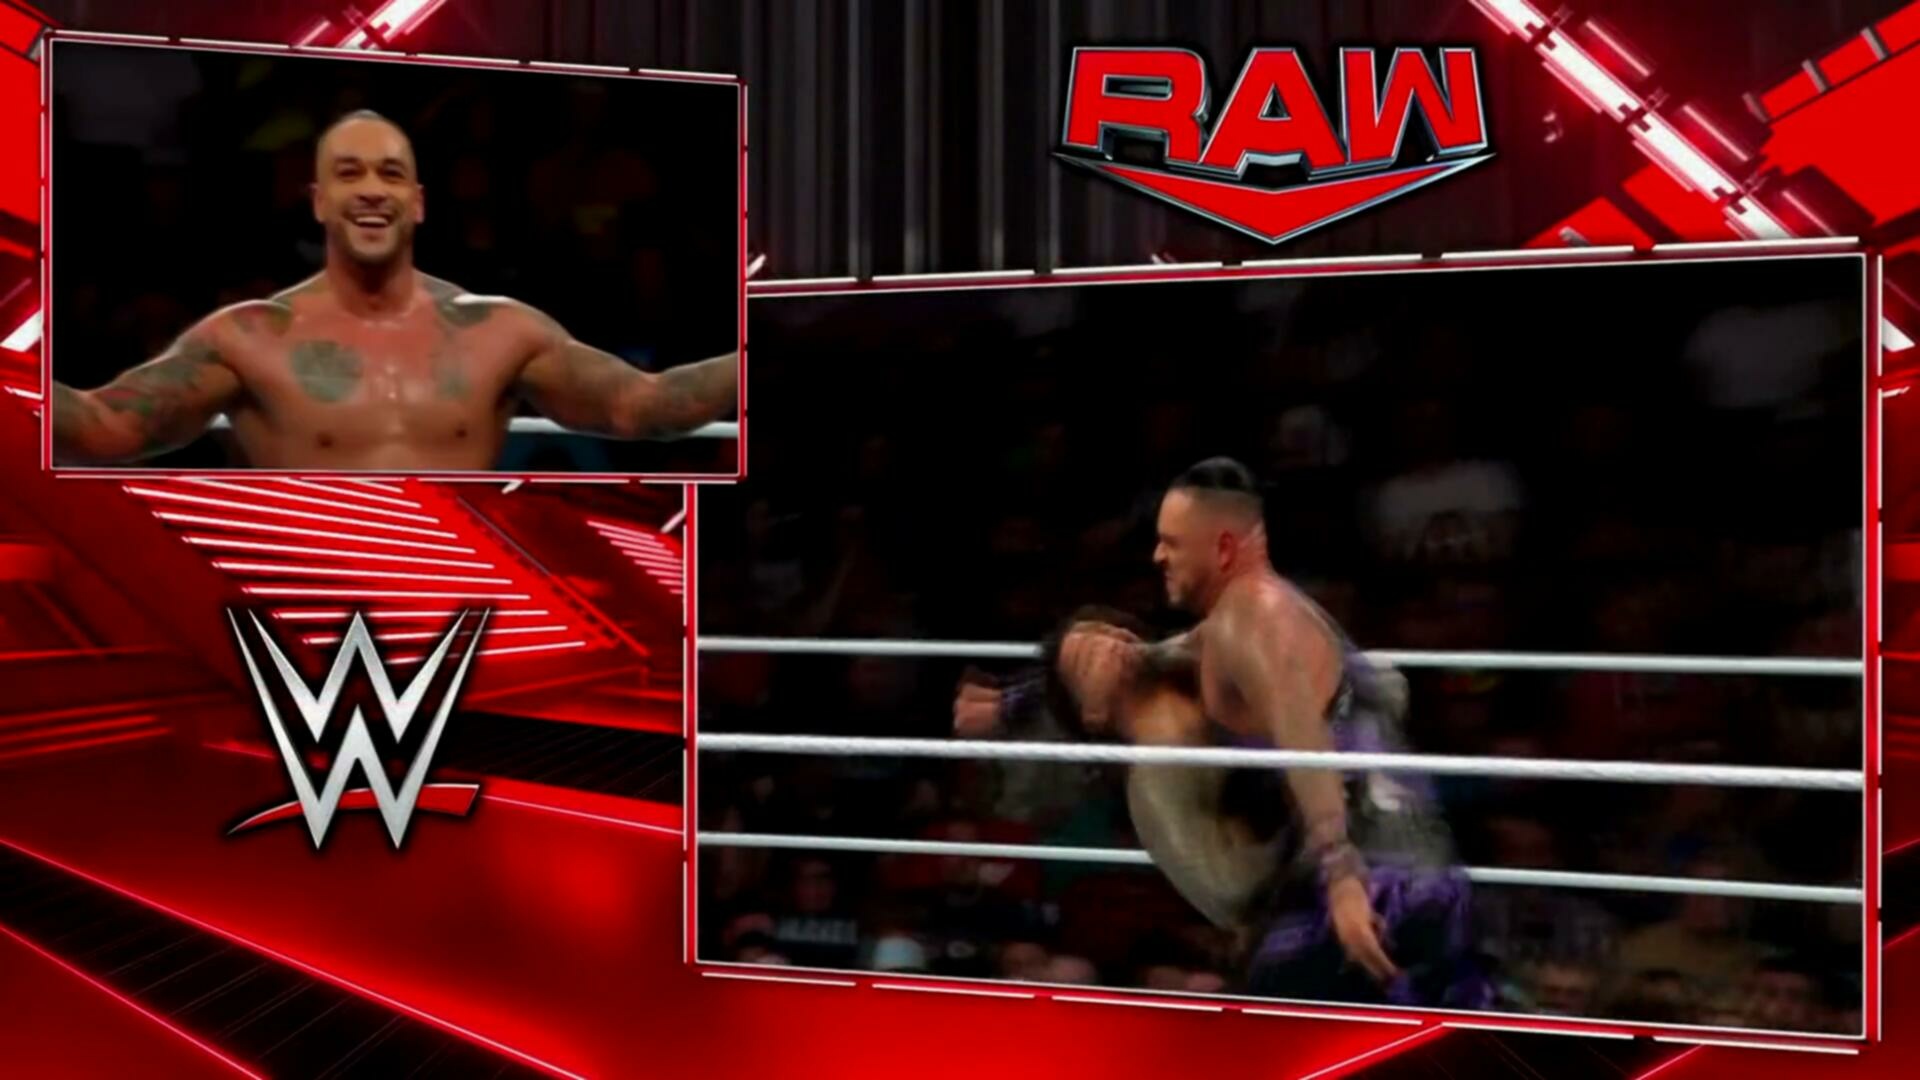 WWE Monday Night Raw 2024 04 29 1080p HDTV h264 Star TGx